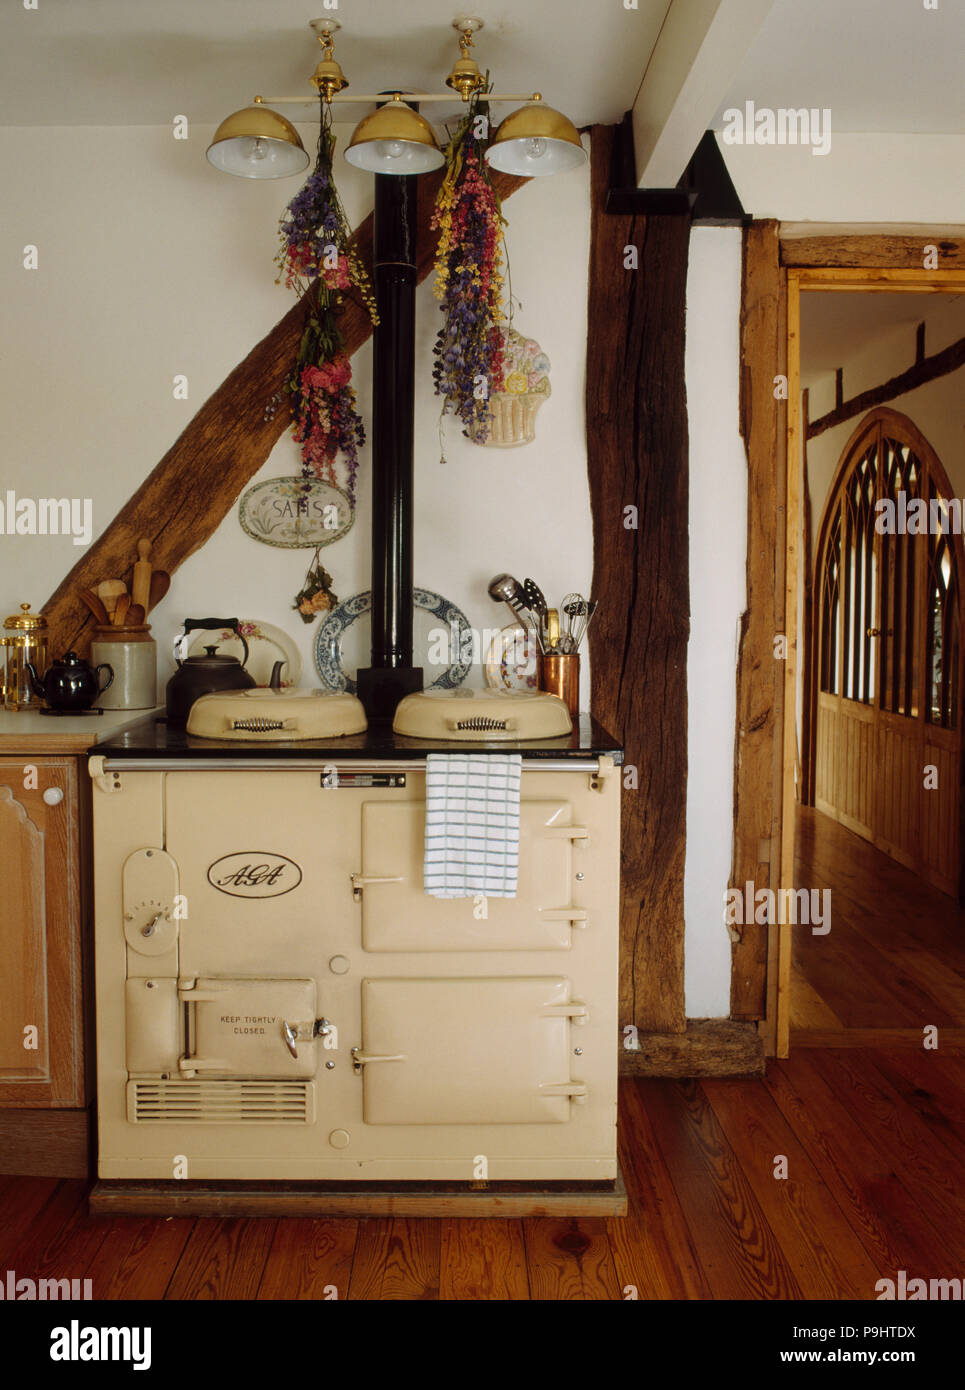 Cream Aga in cottage kitchen Stock Photo